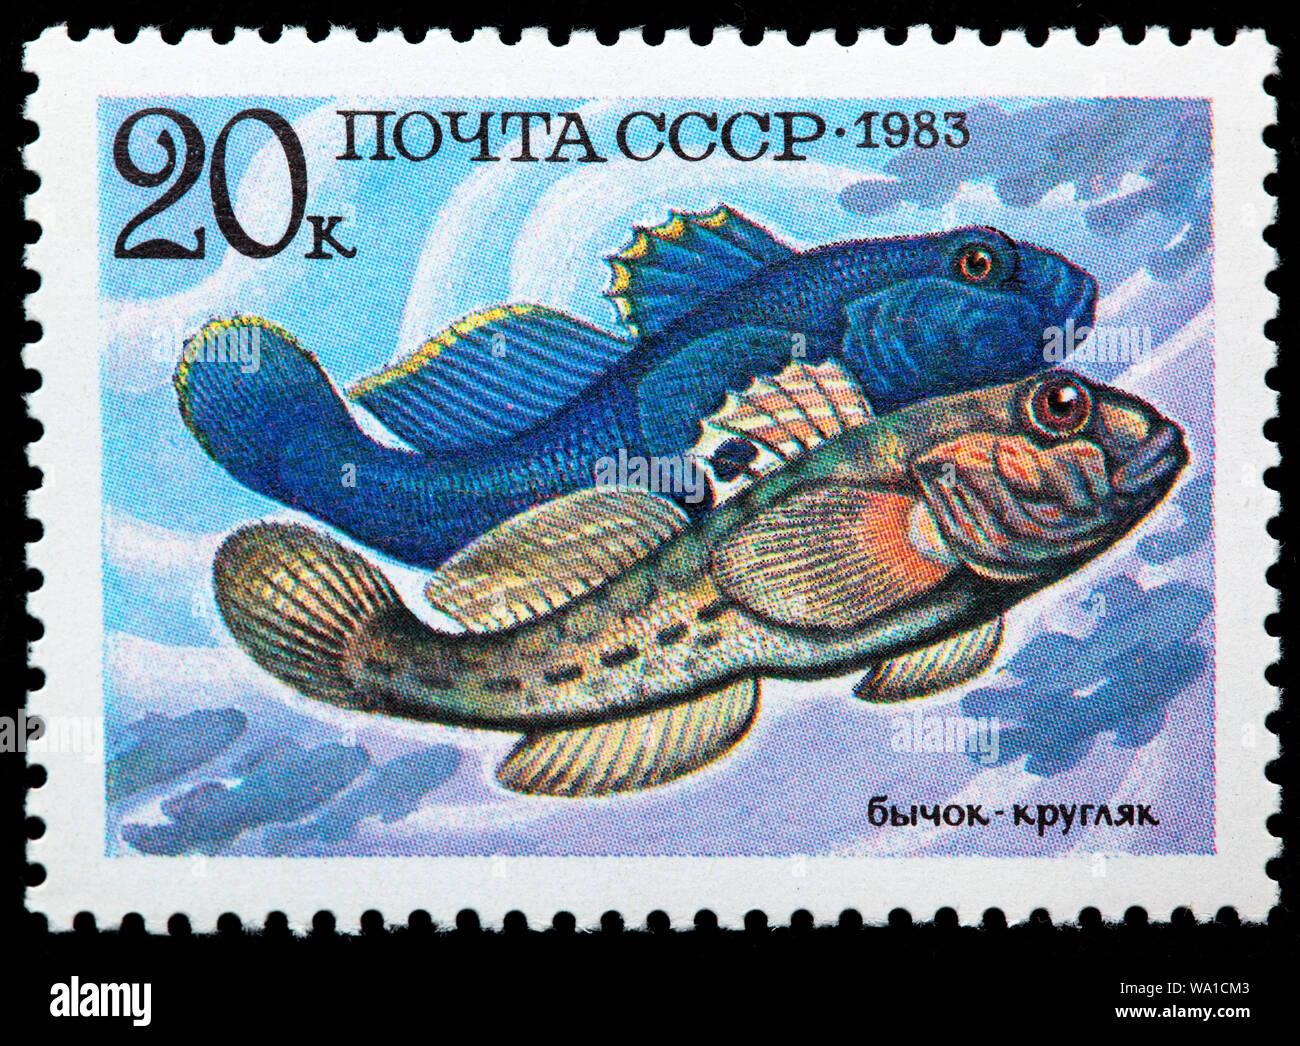 Neogobius melanostomus, Round Goby, fish, postage stamp, Russia, USSR, 1983 Stock Photo